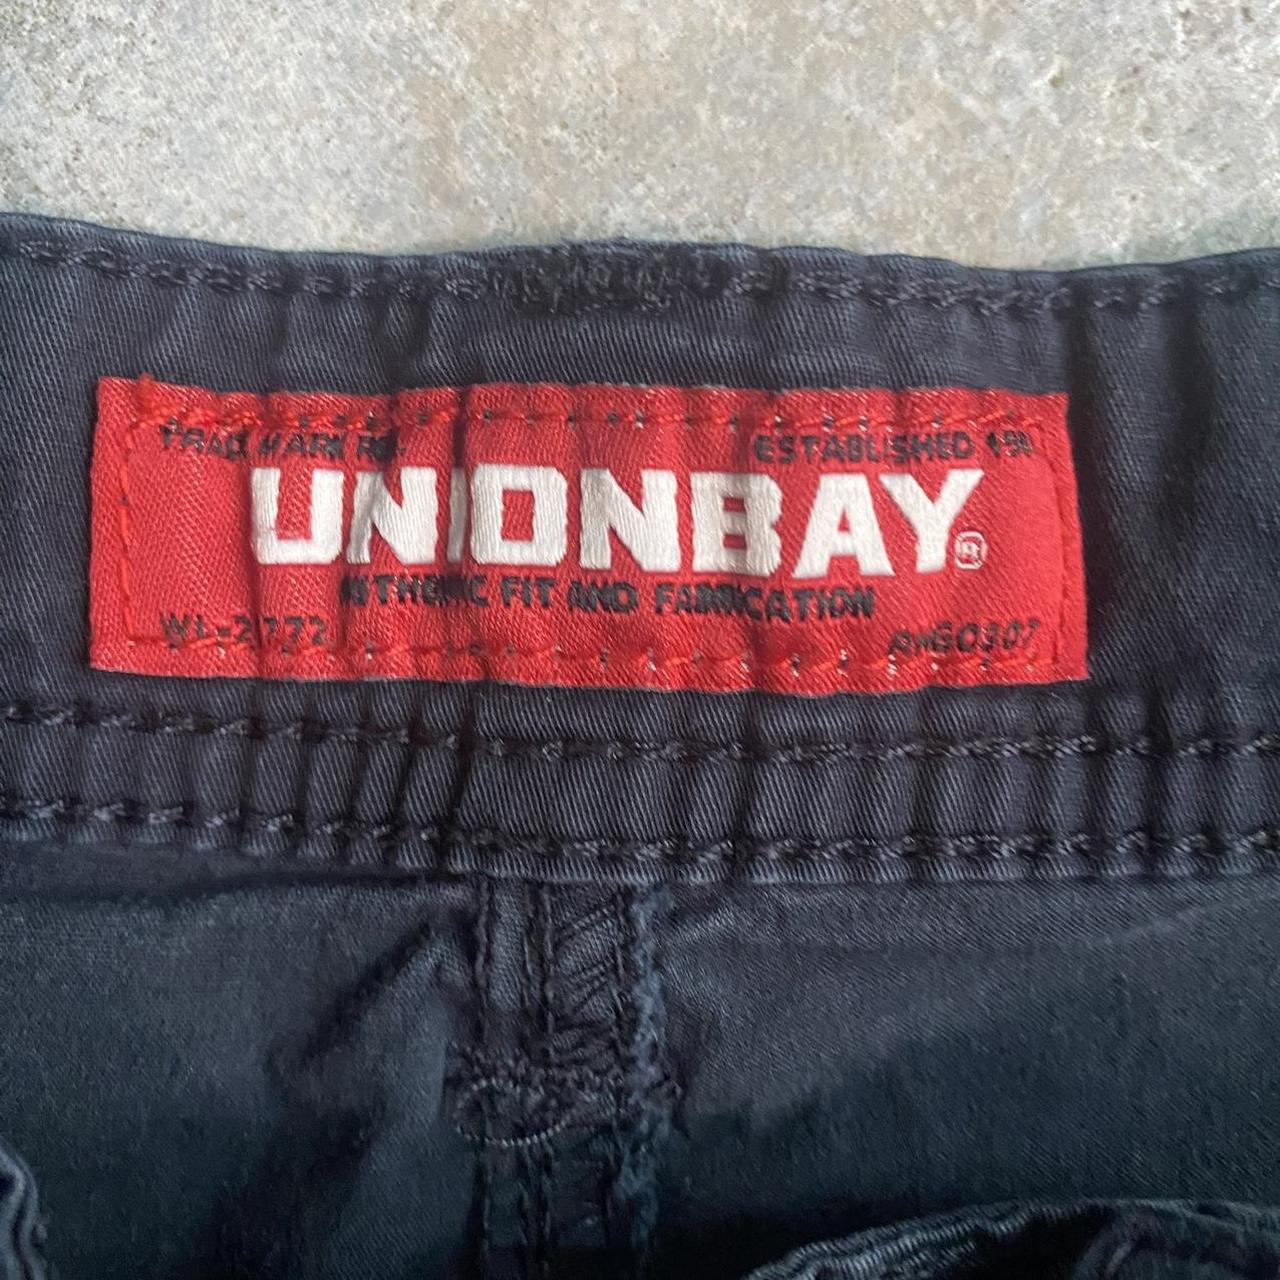 size 34 navy Union Bay cargo shorts #unionbay #cargo... - Depop